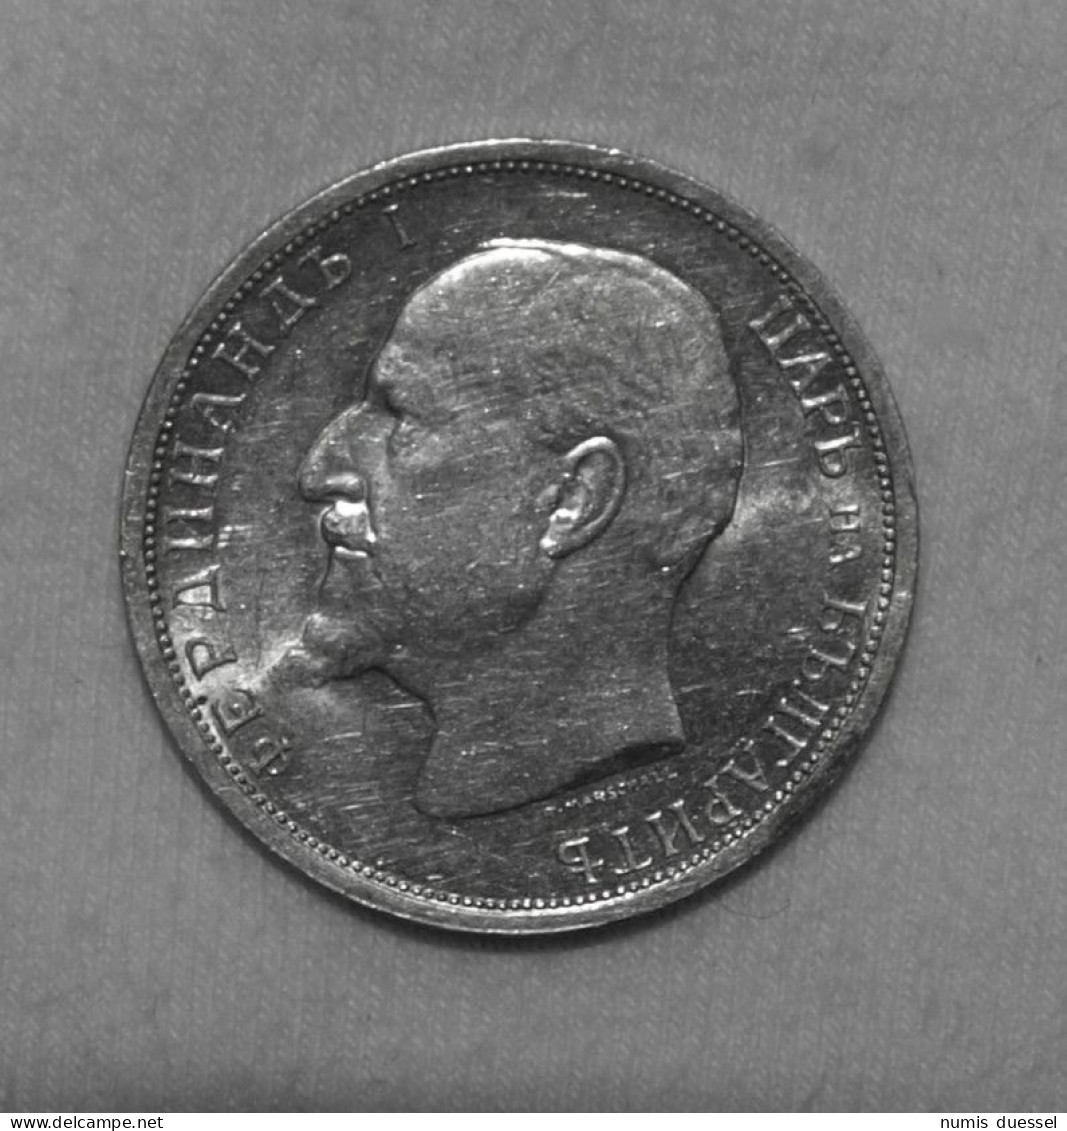 Silber/Silver Bulgarien/Bulgaria Ferdinand I, 1913, 1 Lewa UNC - Bulgarien